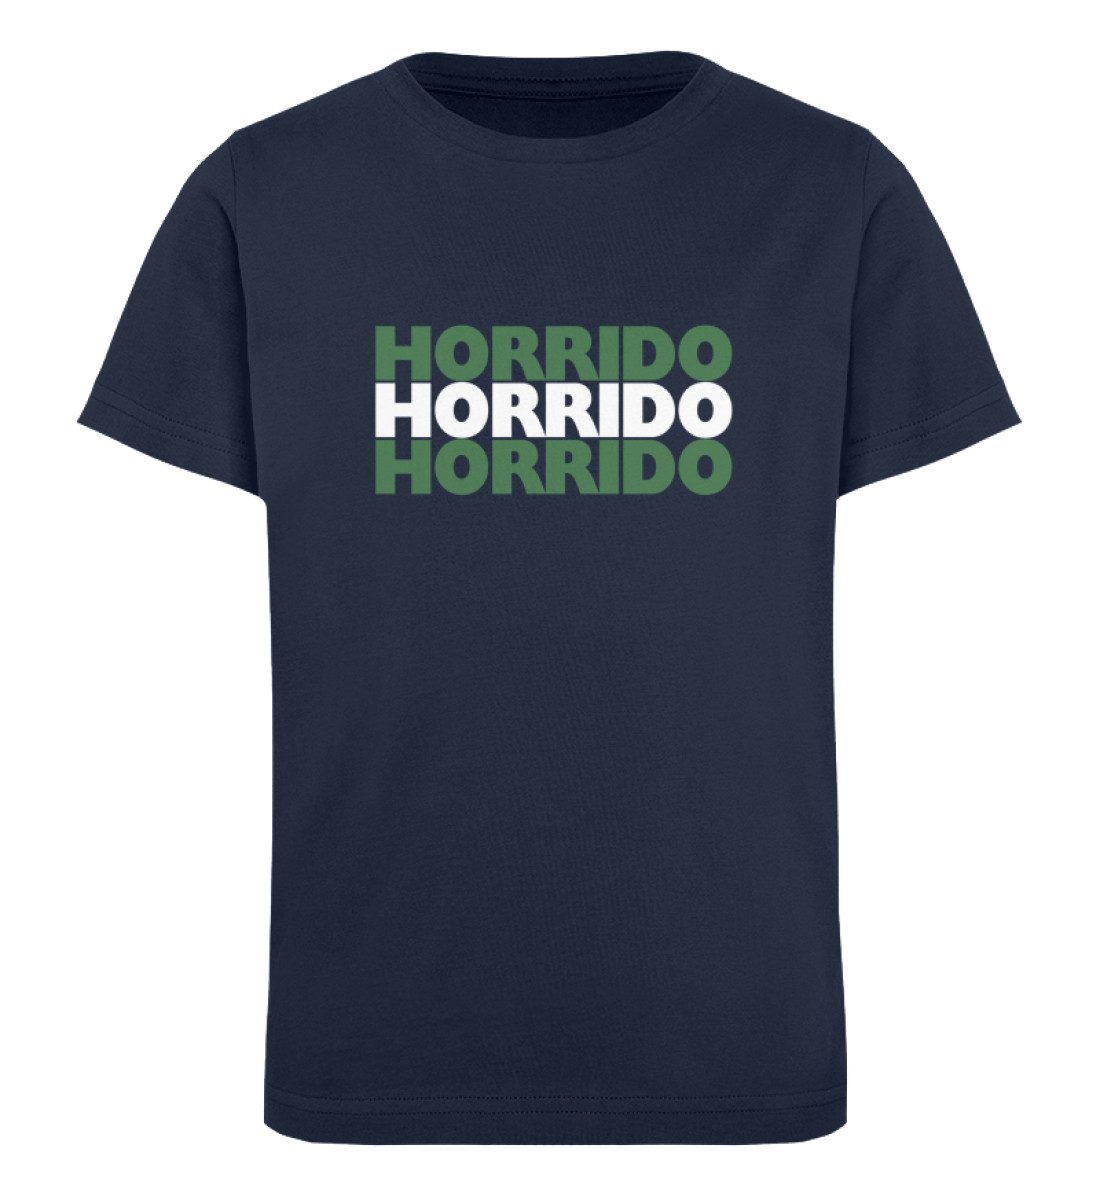 Horrido - Kinder Organic T-Shirt-6887